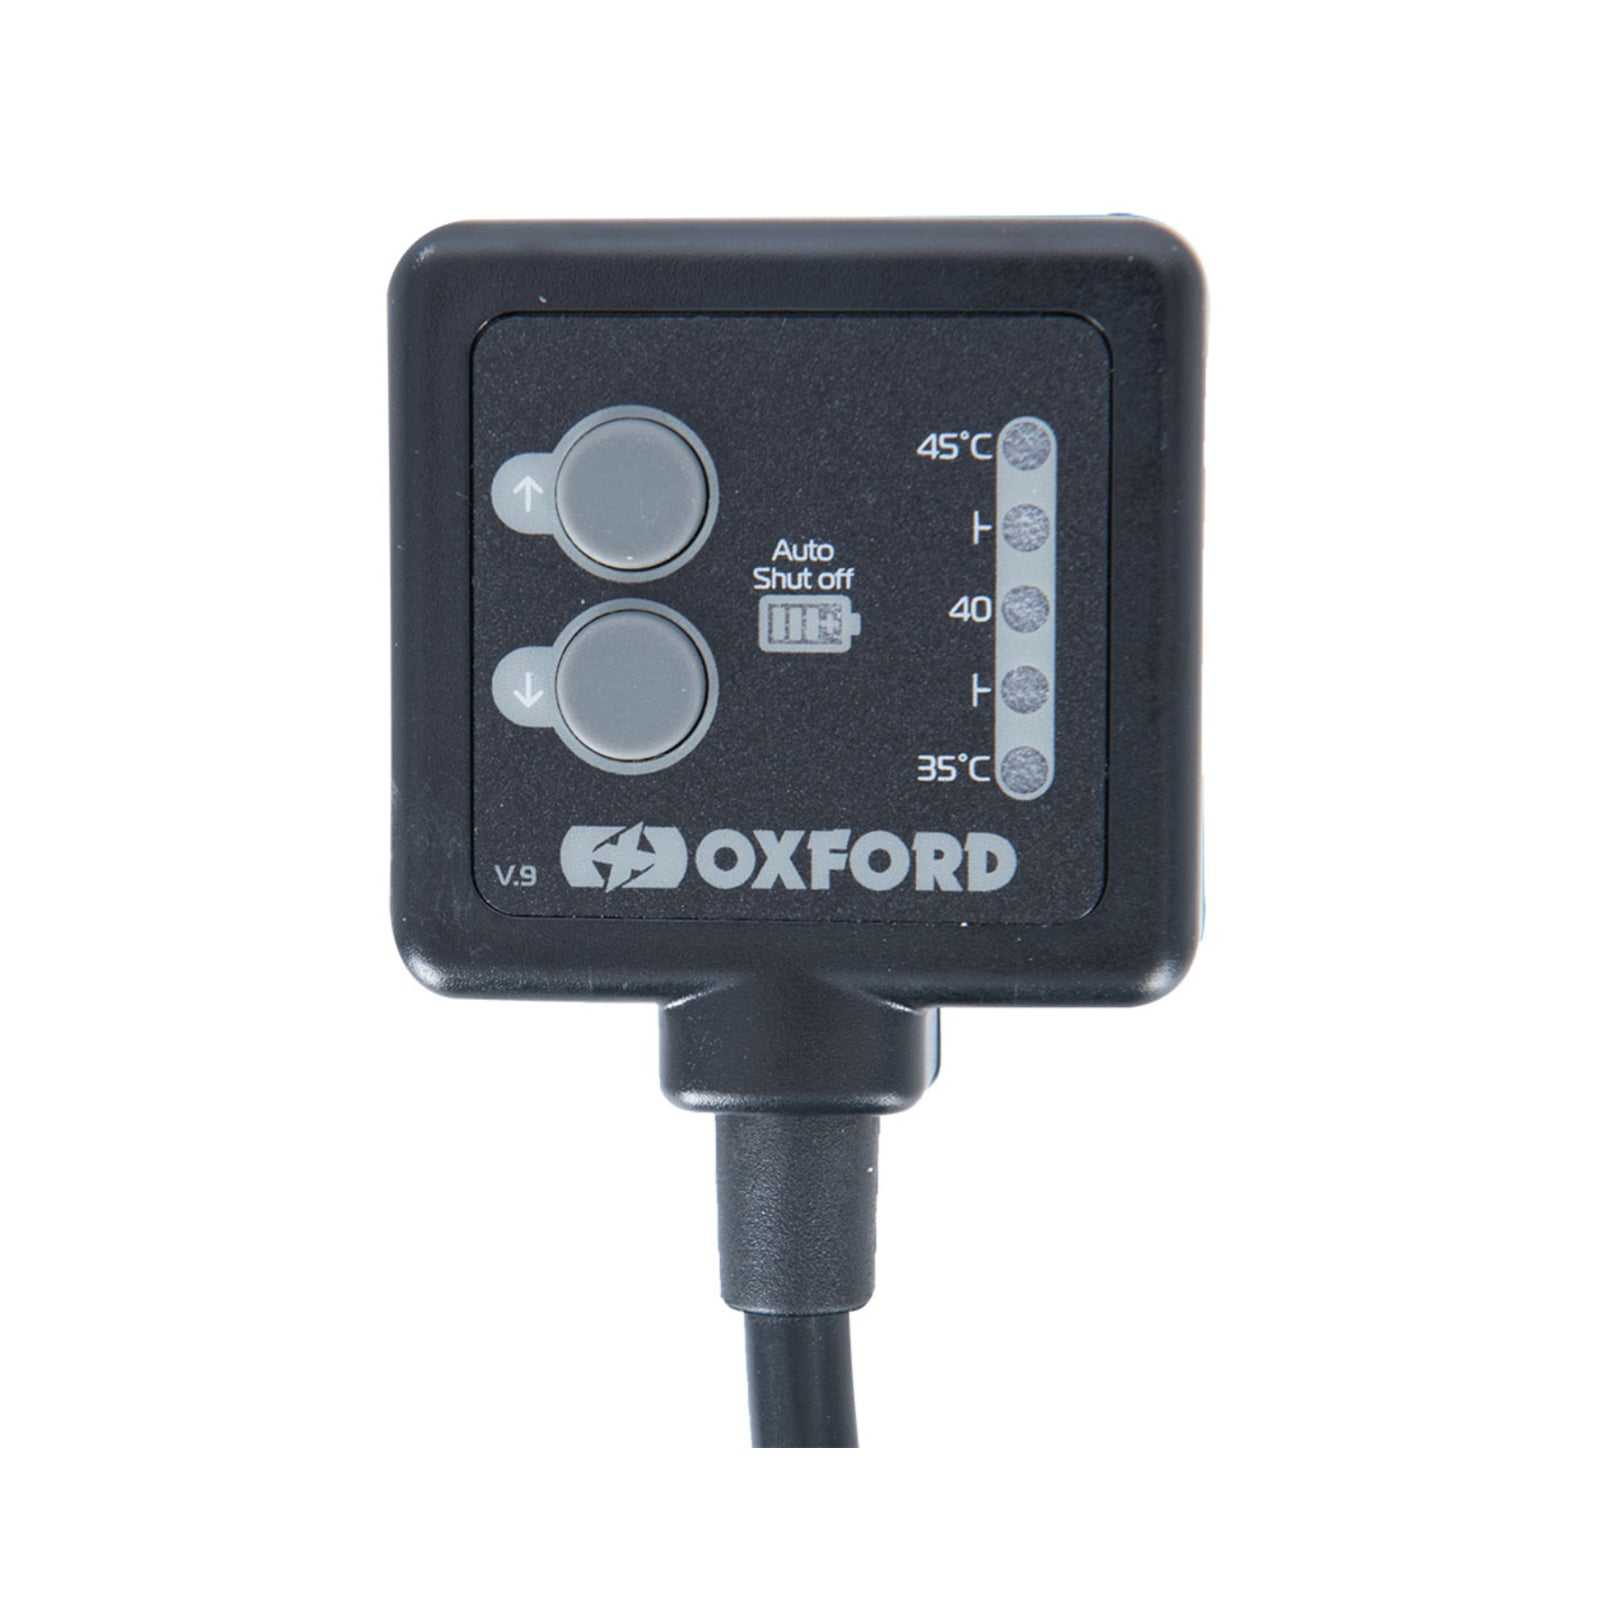 Oxford, Oxford EVO HotGrips® Adventure - V9 Thermister Switch